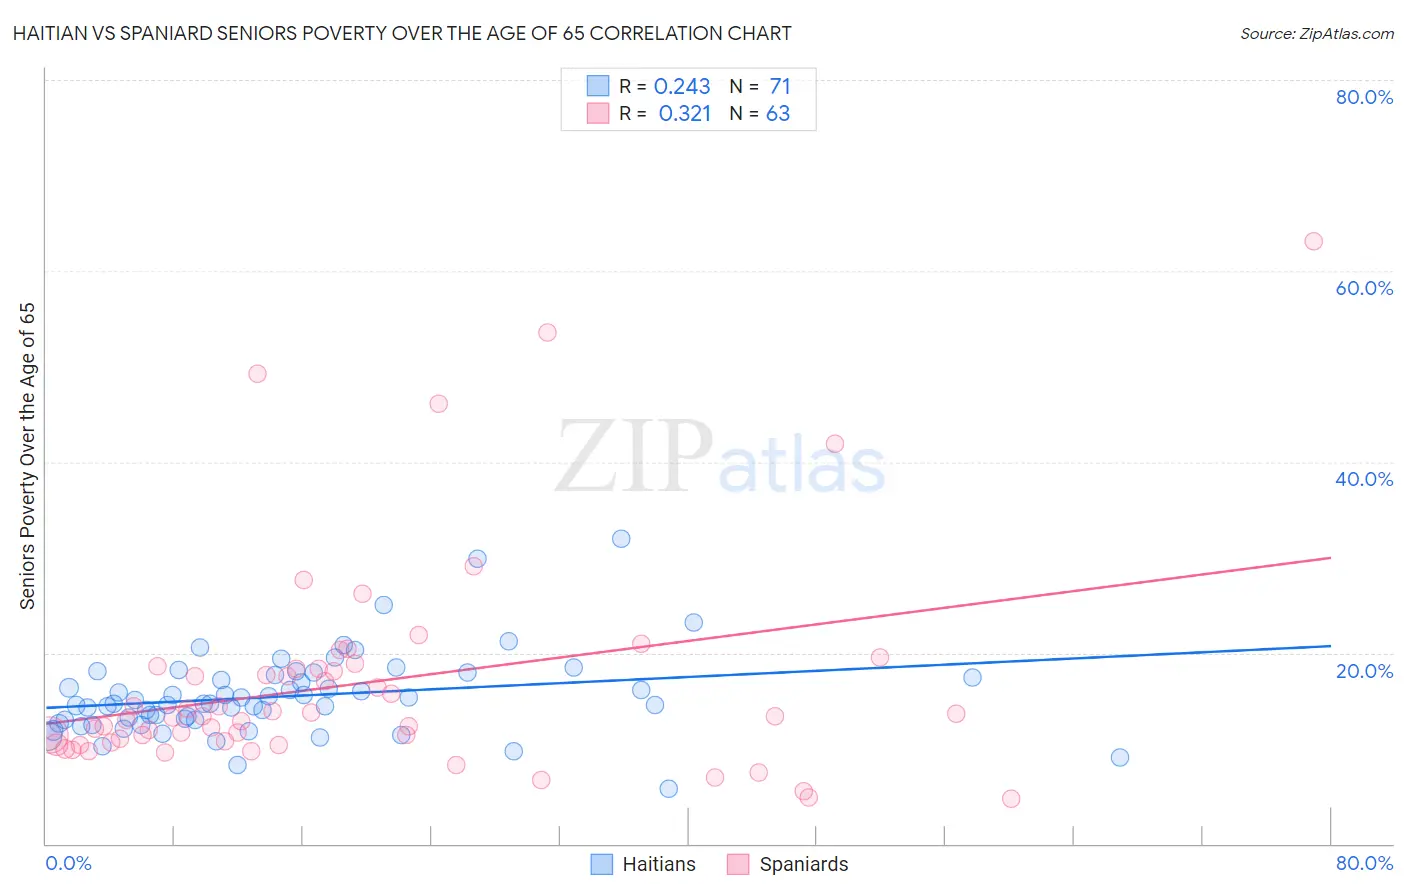 Haitian vs Spaniard Seniors Poverty Over the Age of 65